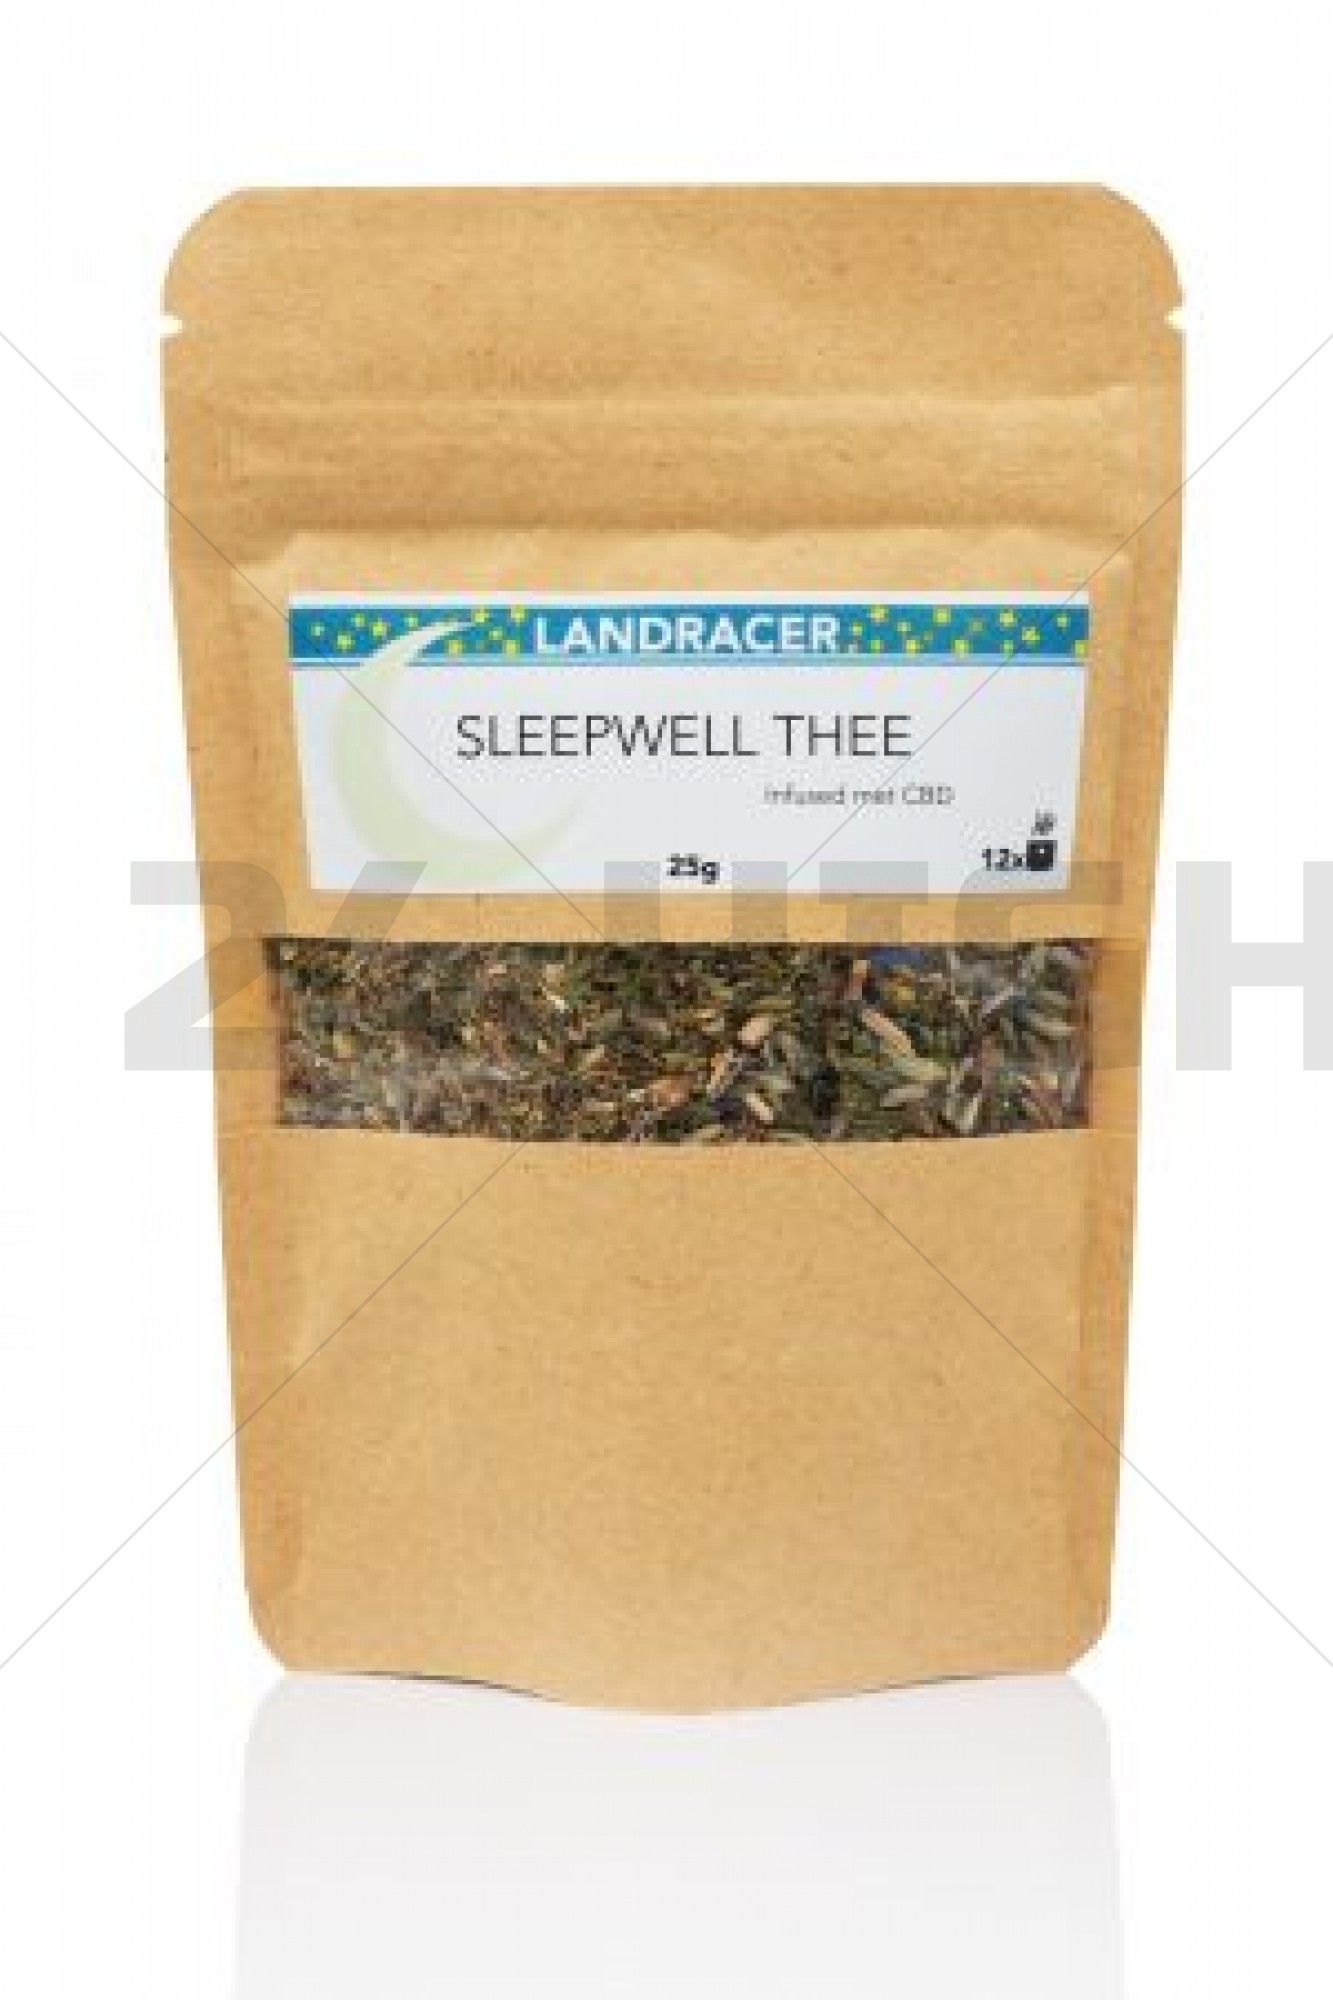 Landracer Sleepwell (Dormir bien) Thé - infusé au CBD